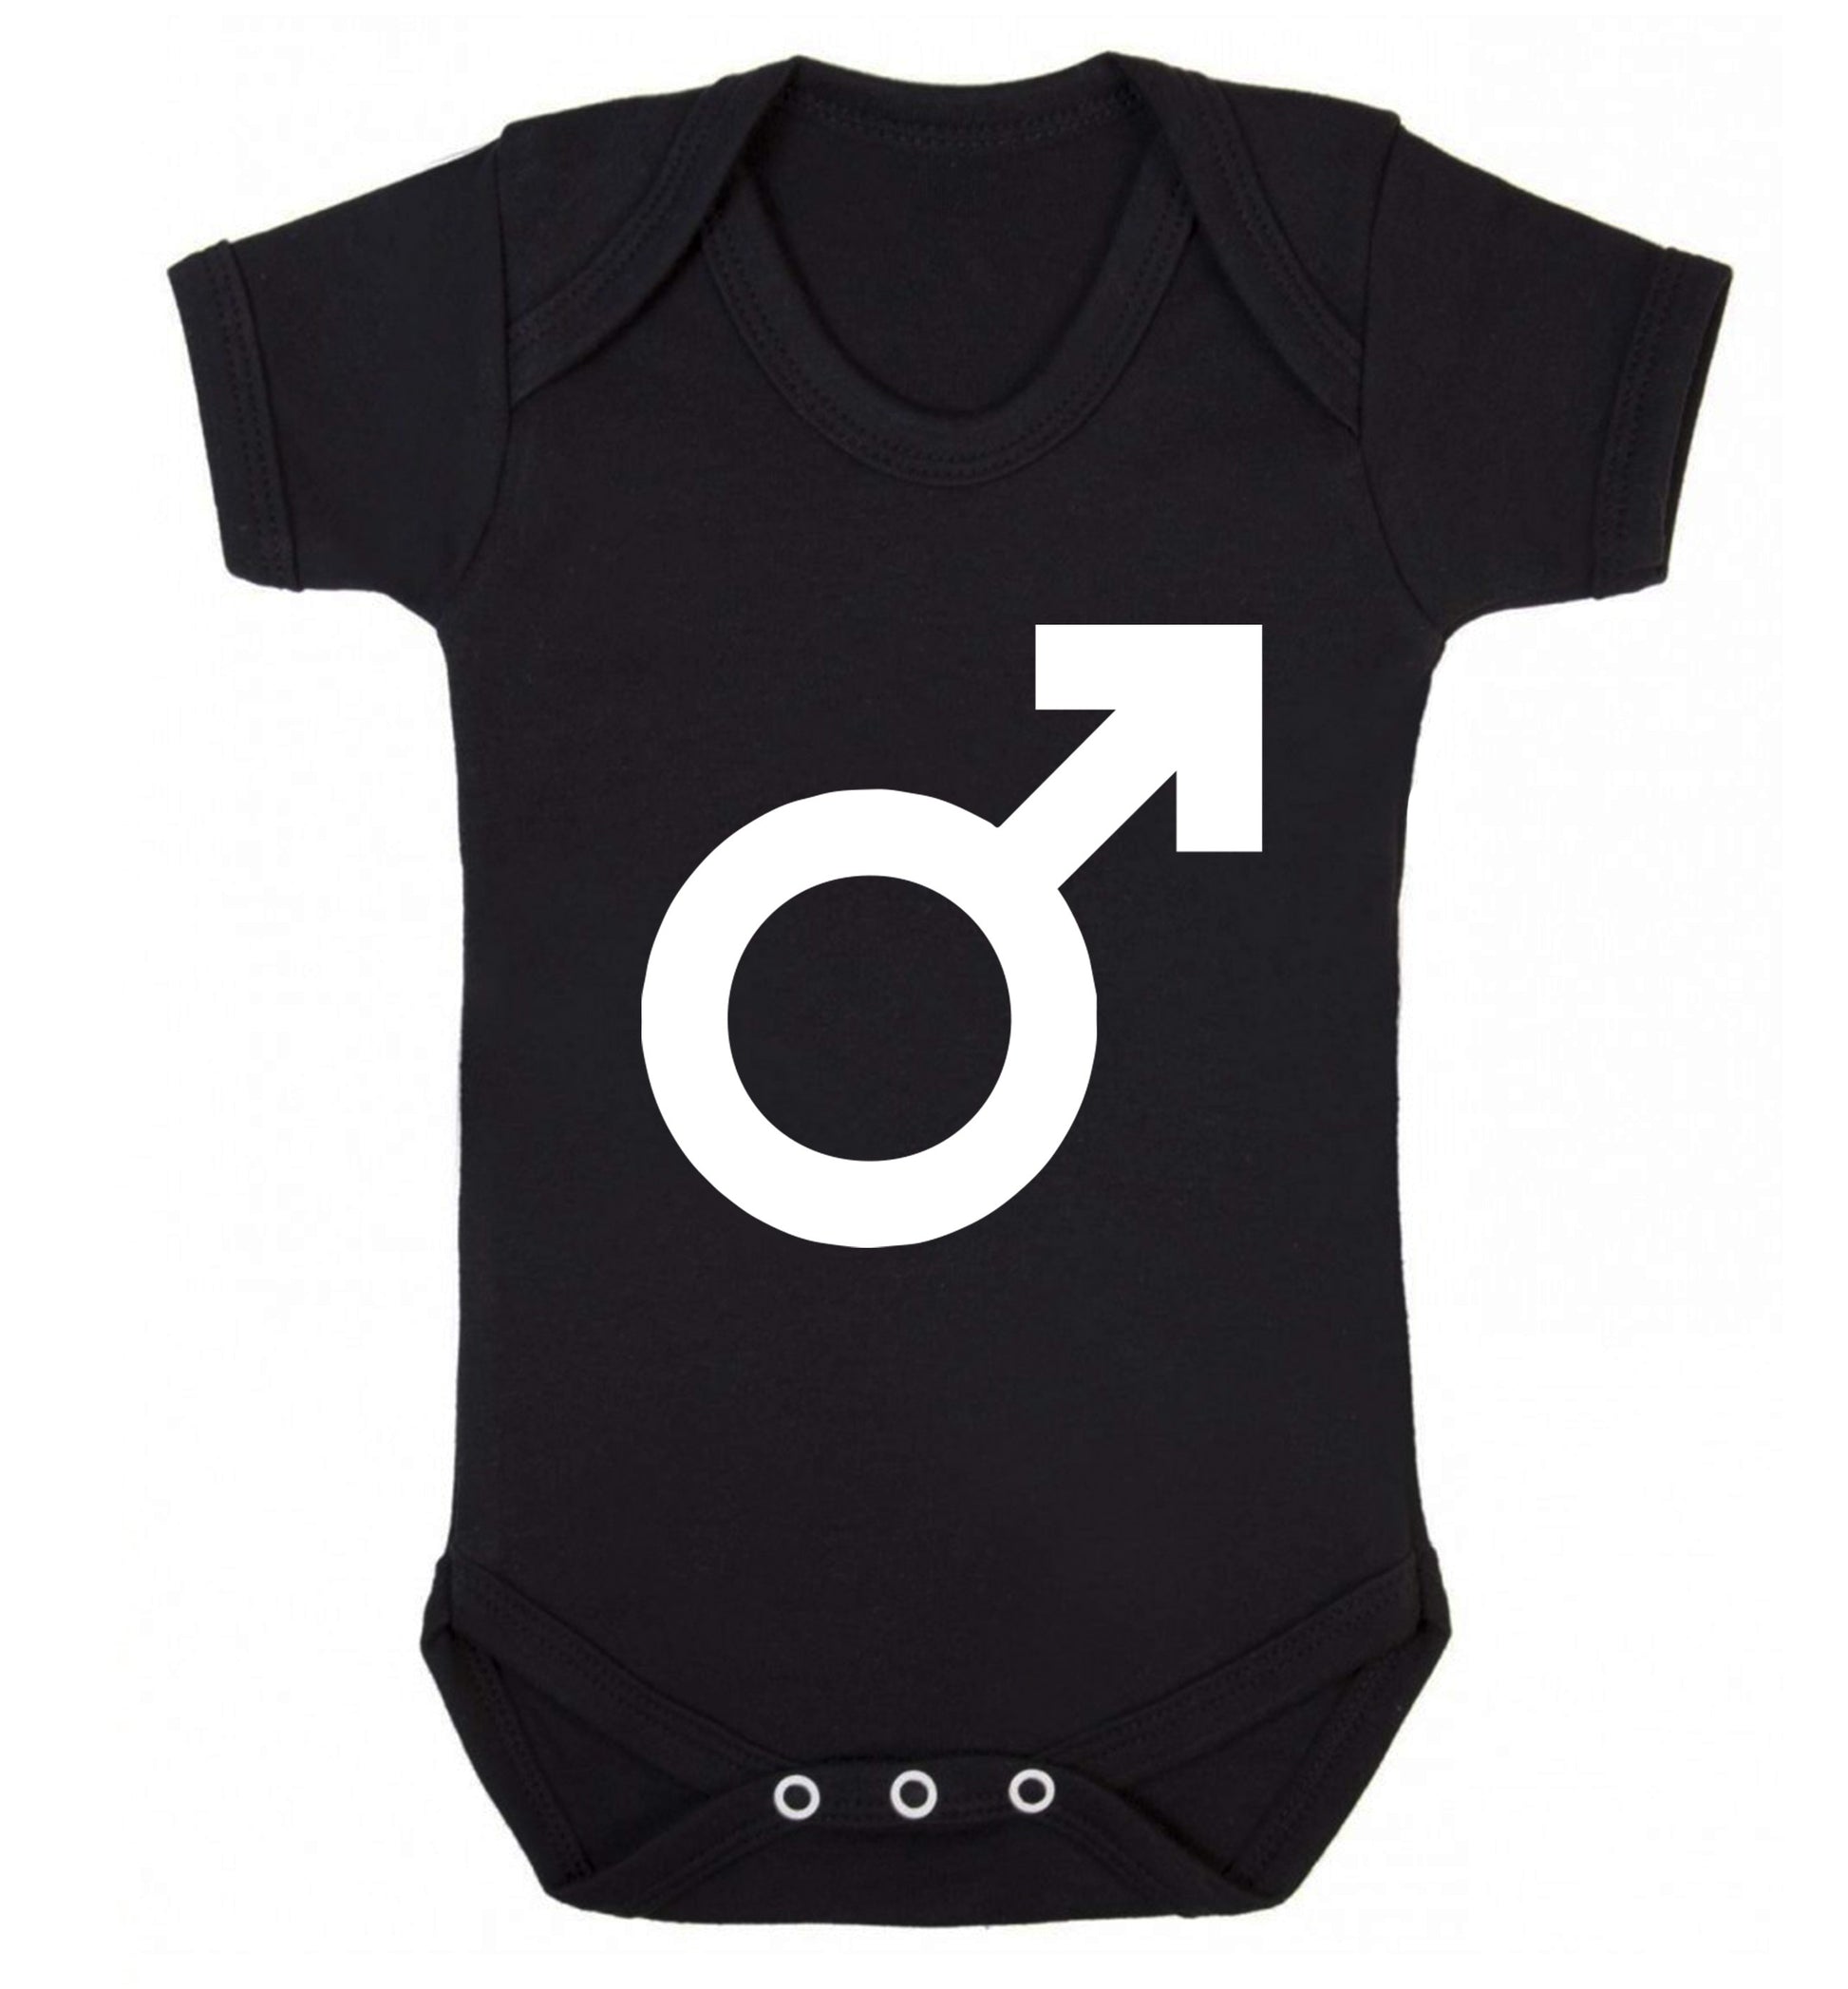 Male symbol large Baby Vest black 18-24 months